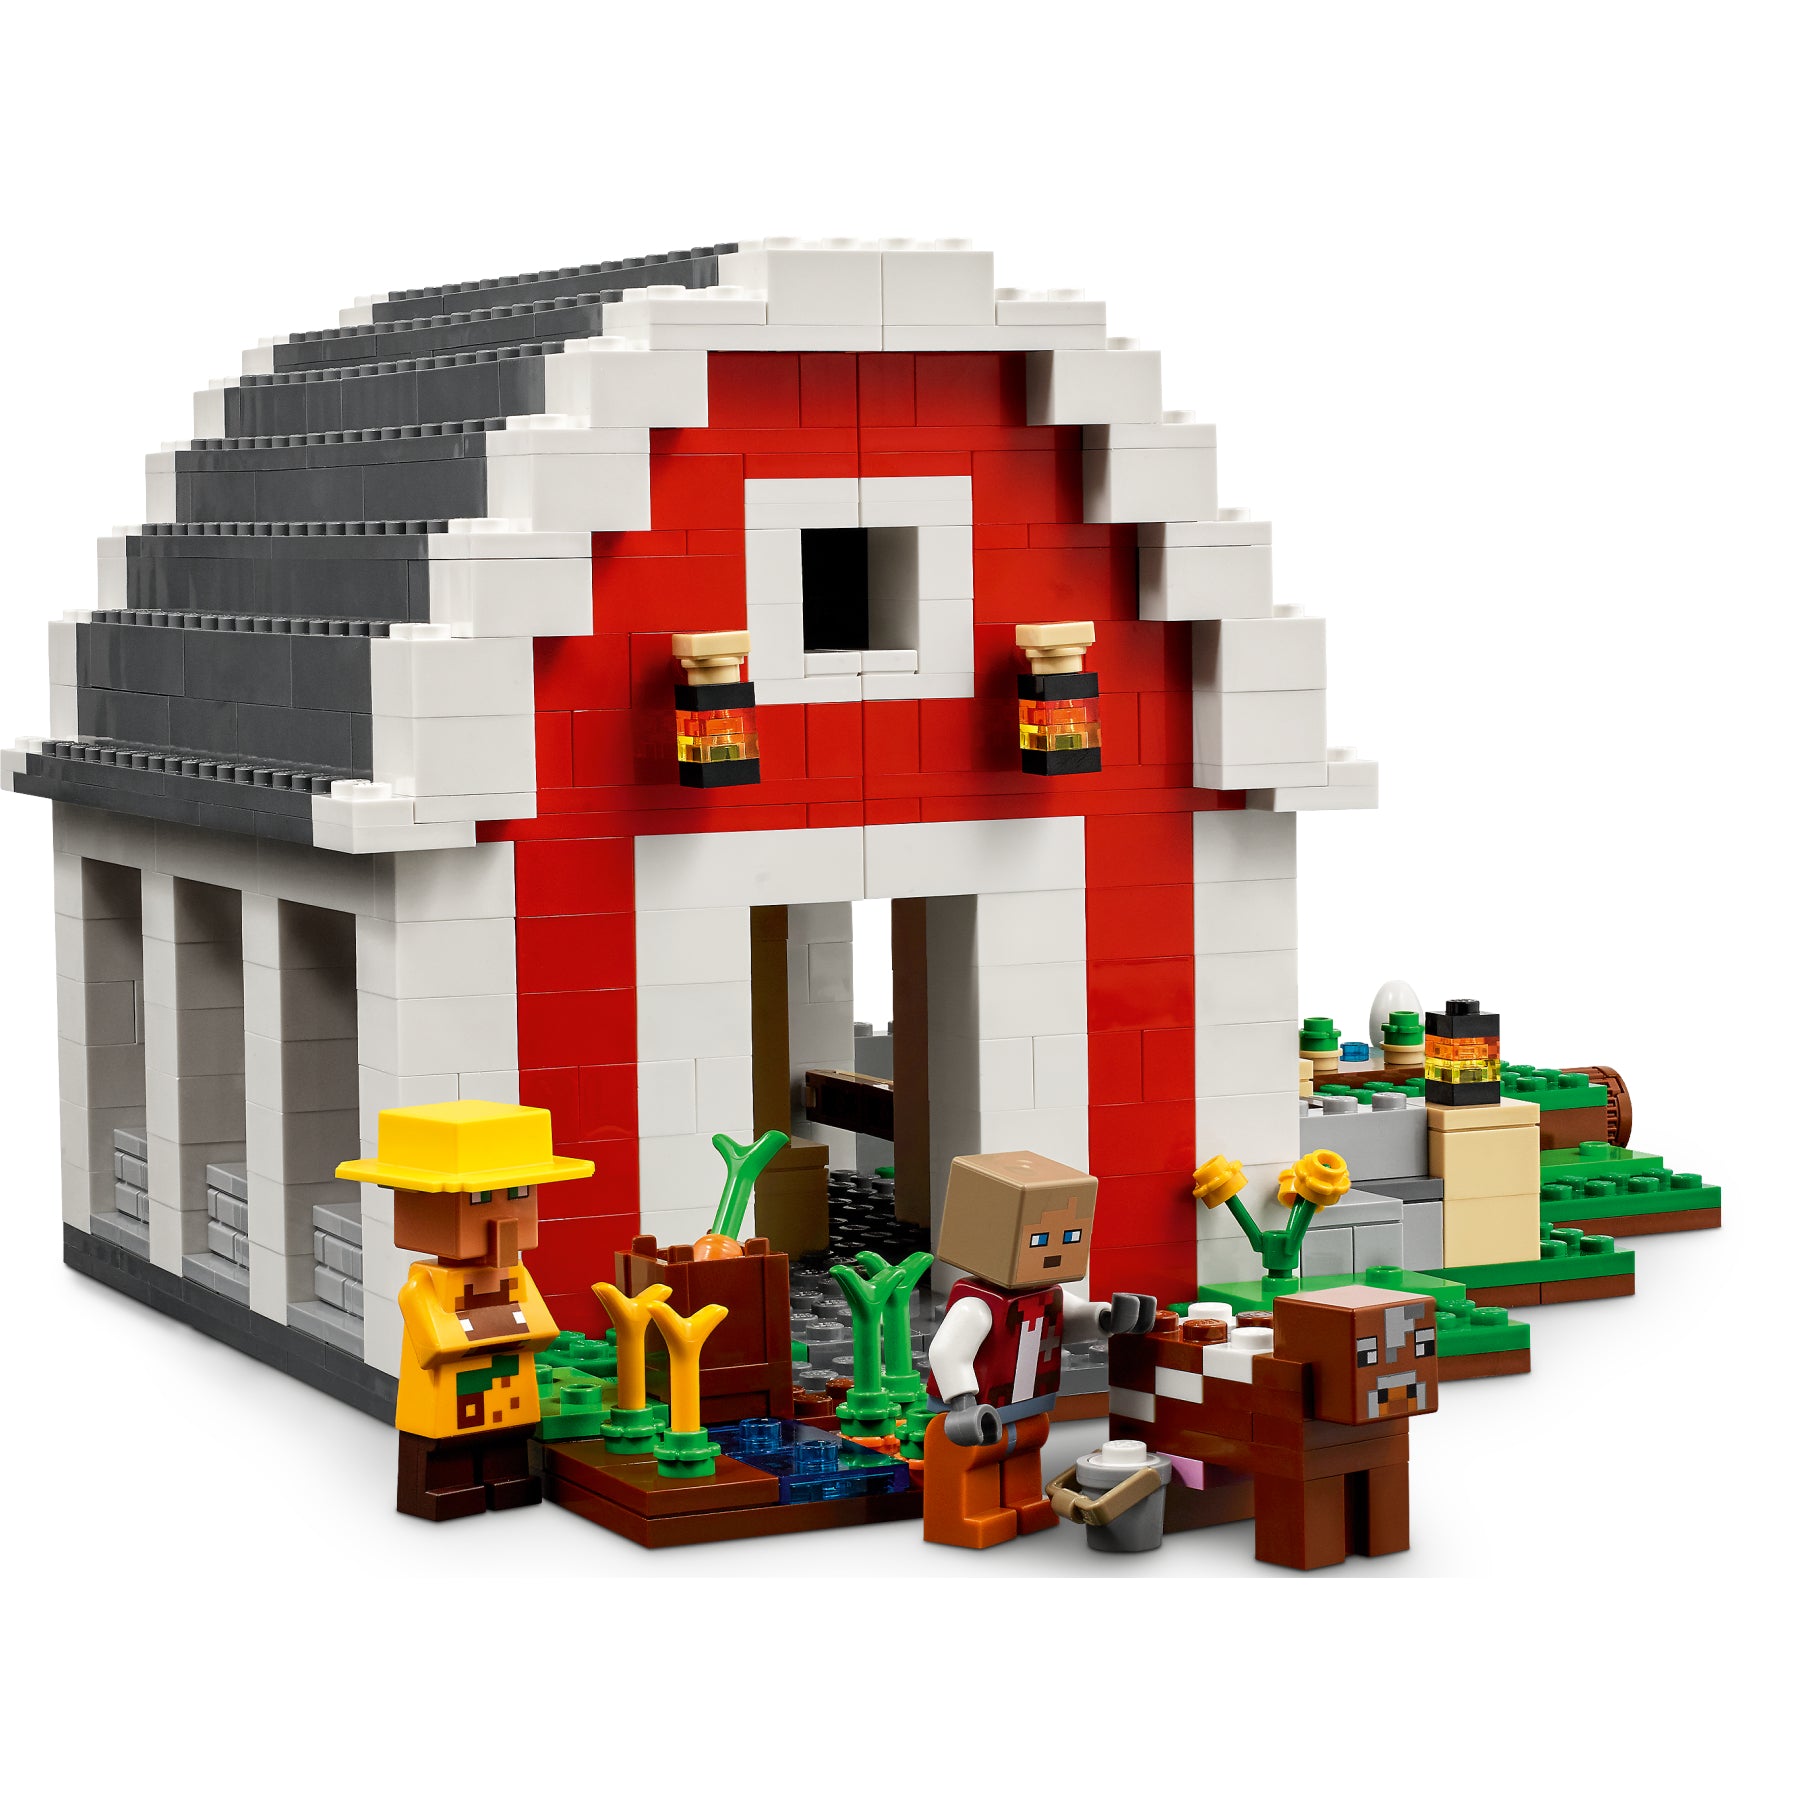 Dental Gummi Minearbejder LEGO 21187 Minecraft The Red Barn | Blocks and Bricks